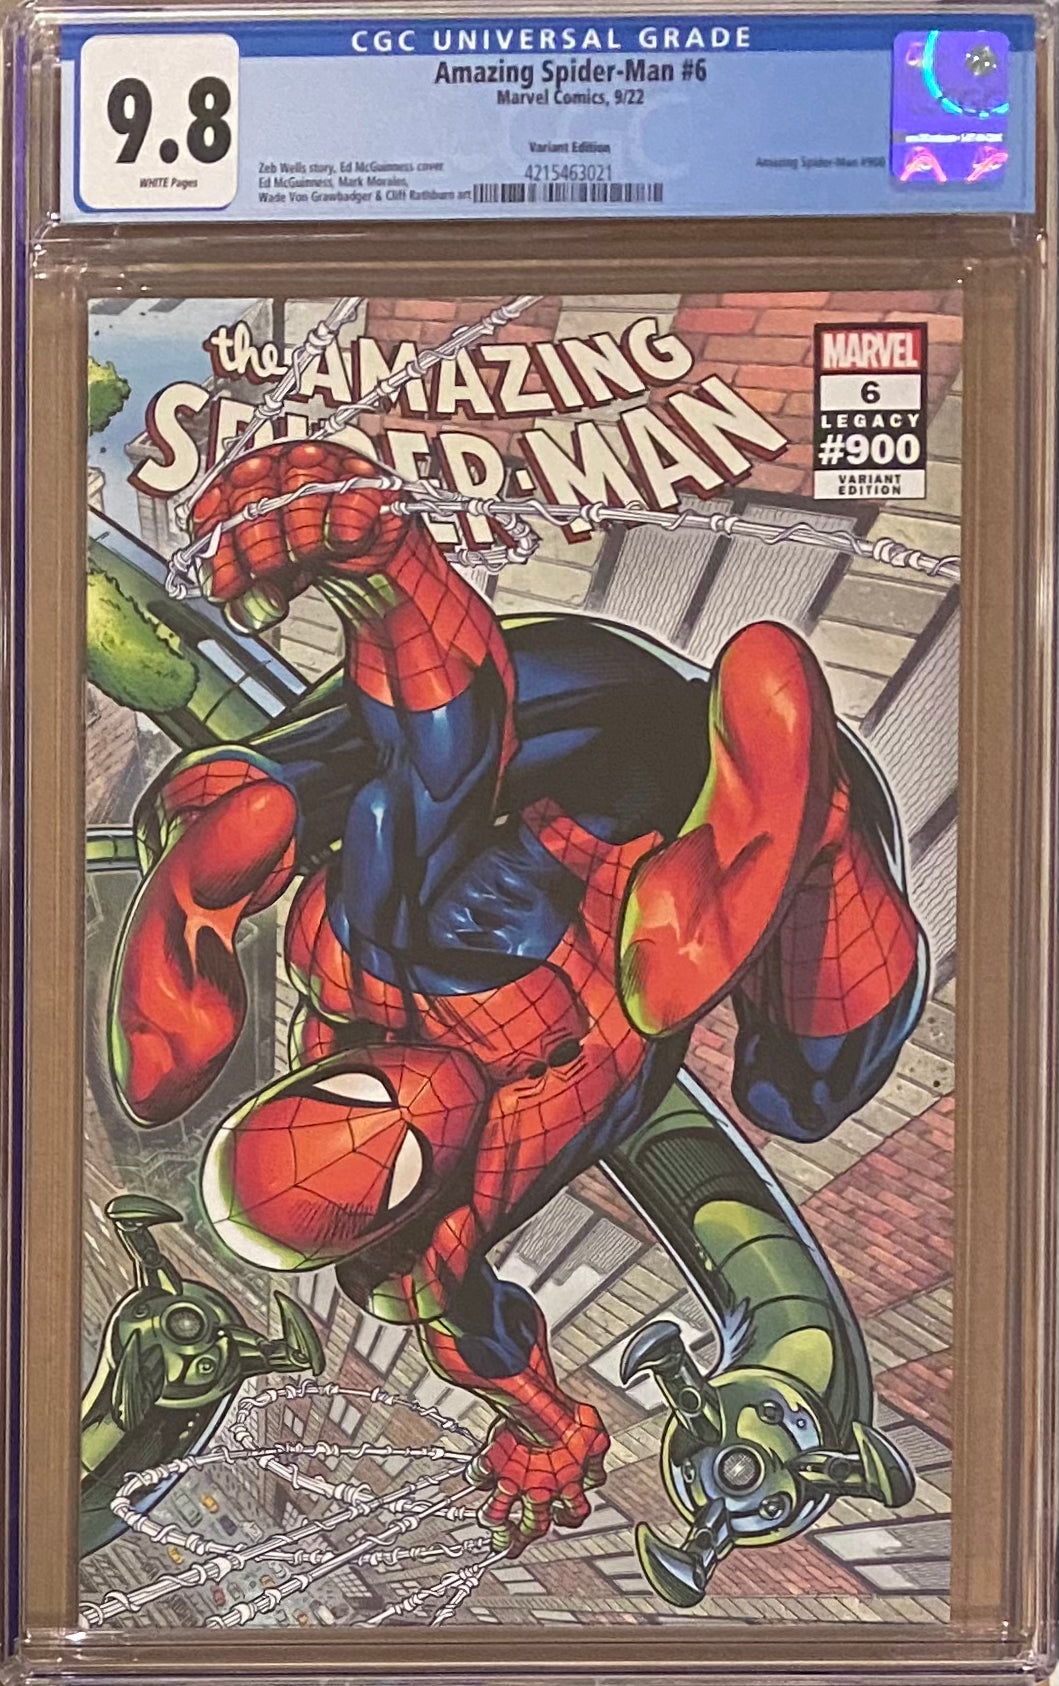 Amazing Spider-Man #6 (#900) McGuinness Wraparound Variant CGC 9.8